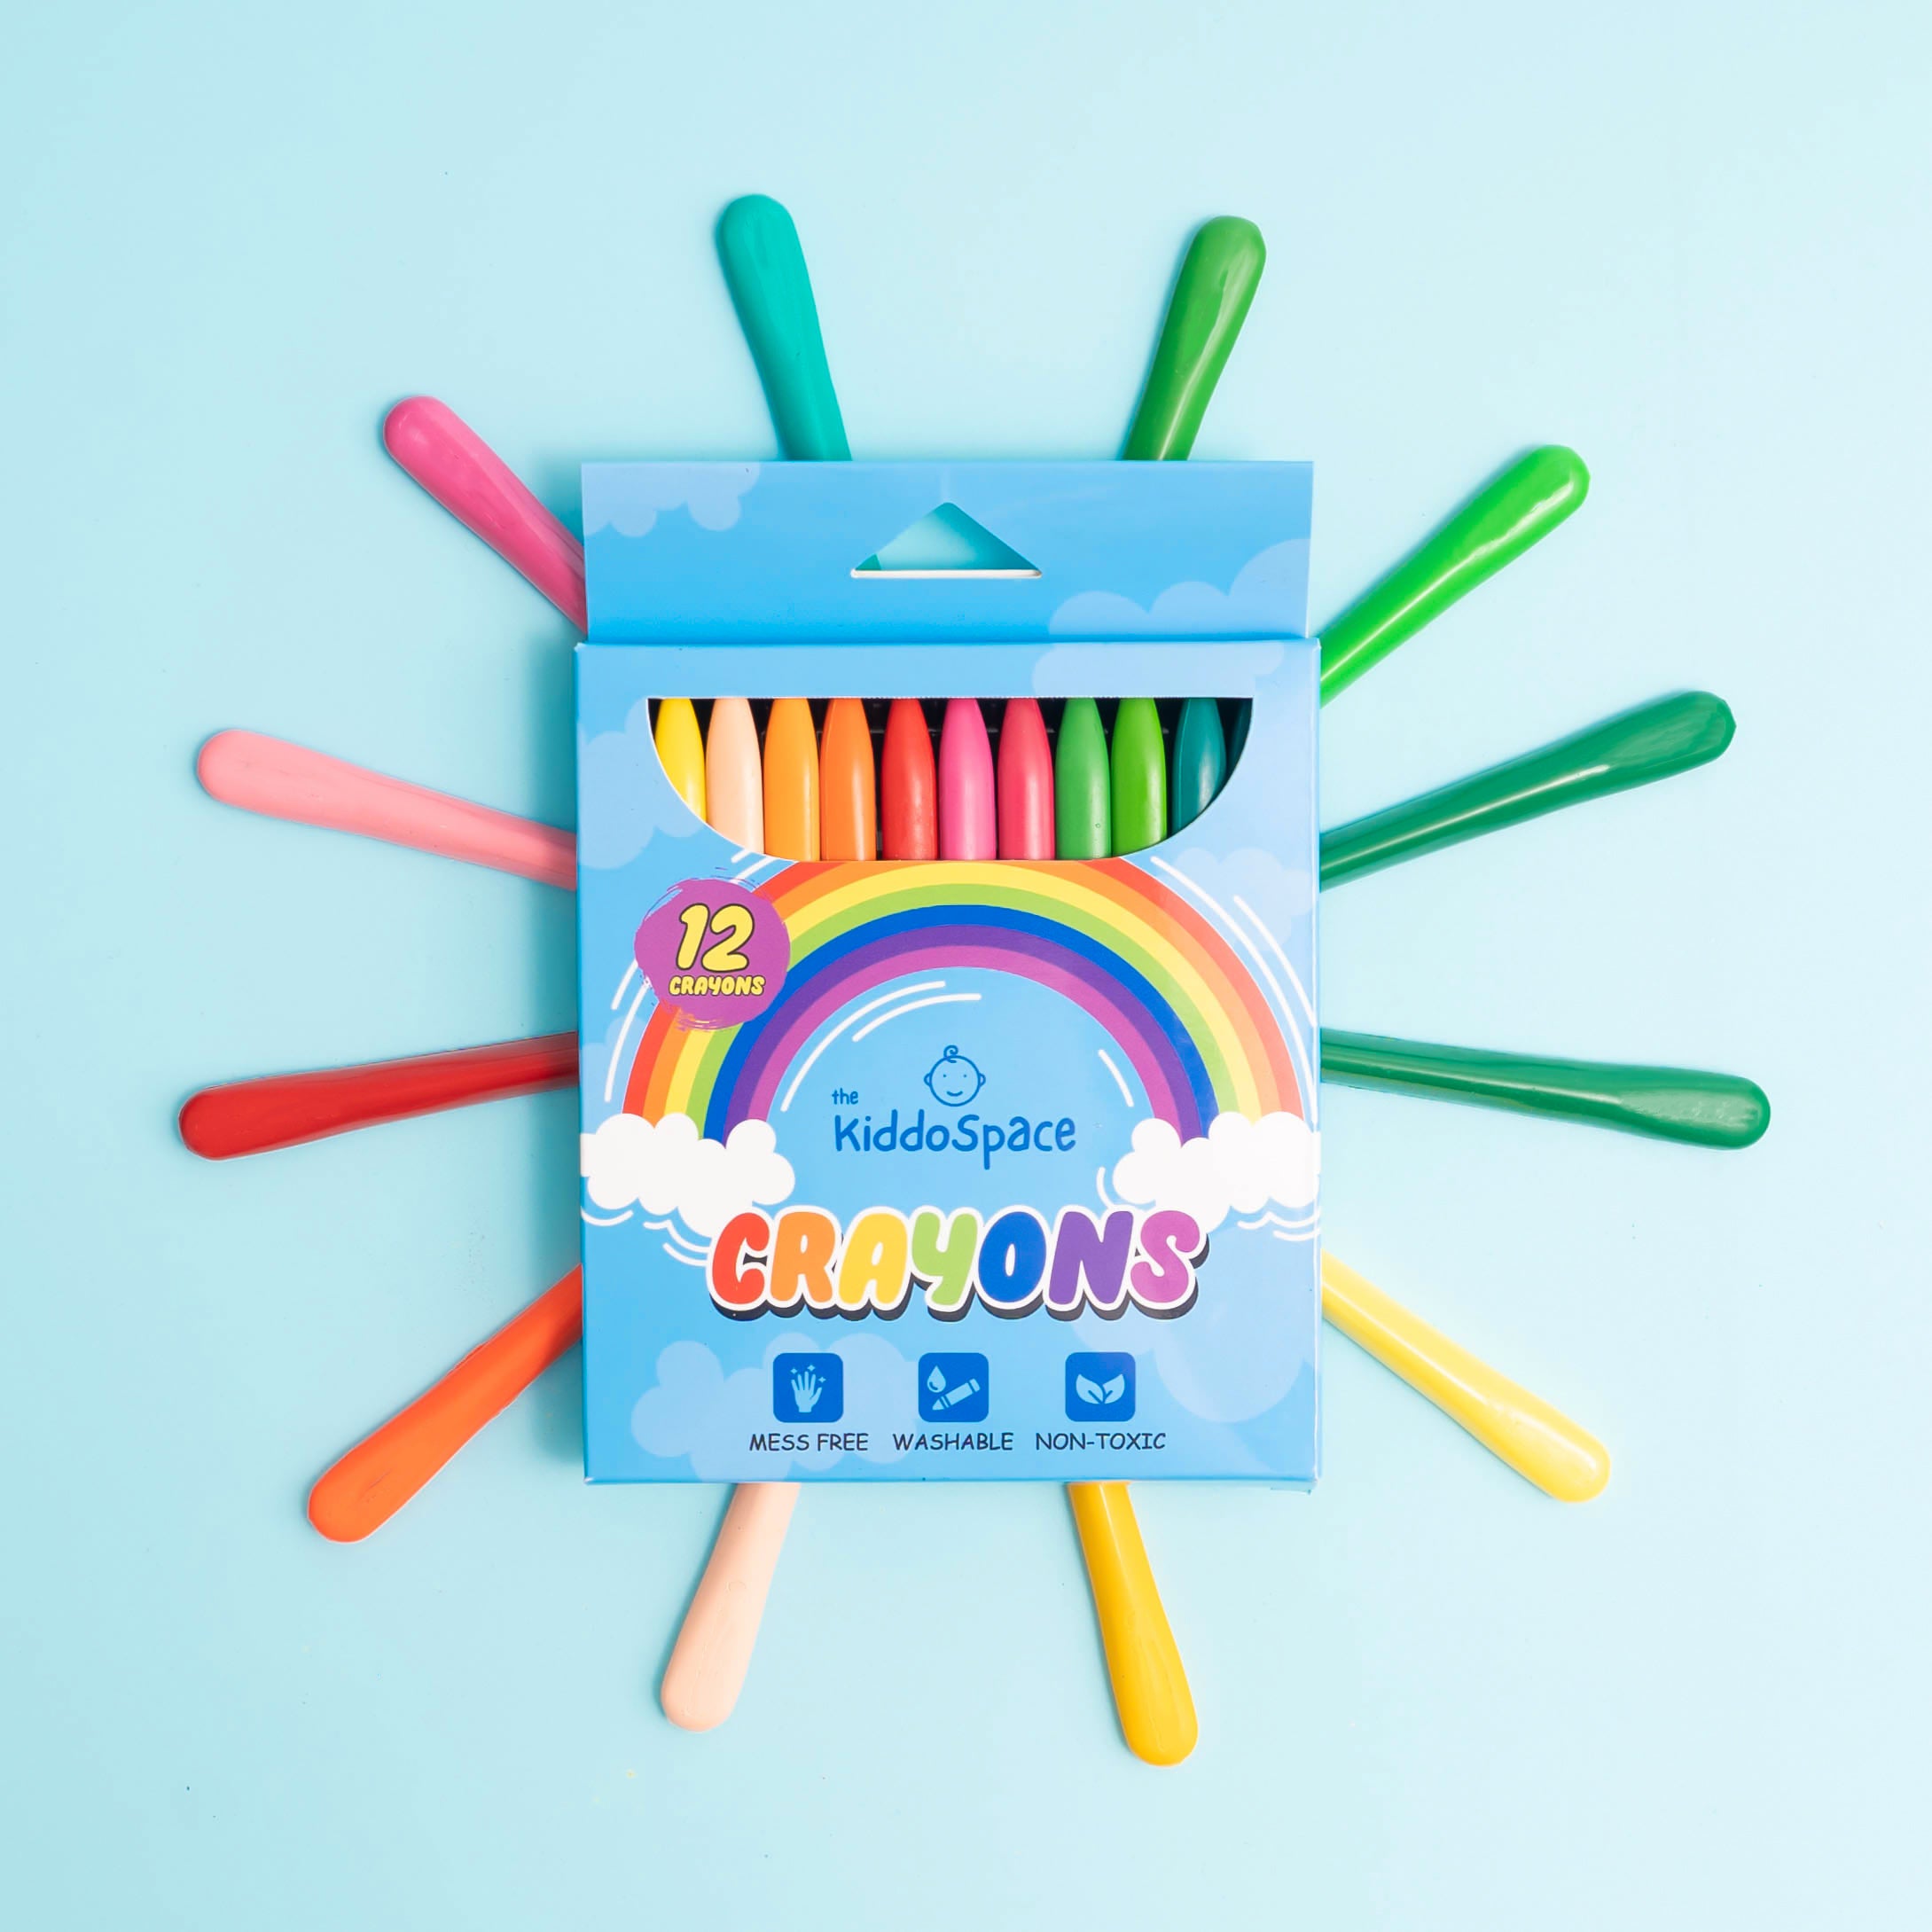 KiddoSpace’s Washable Crayons